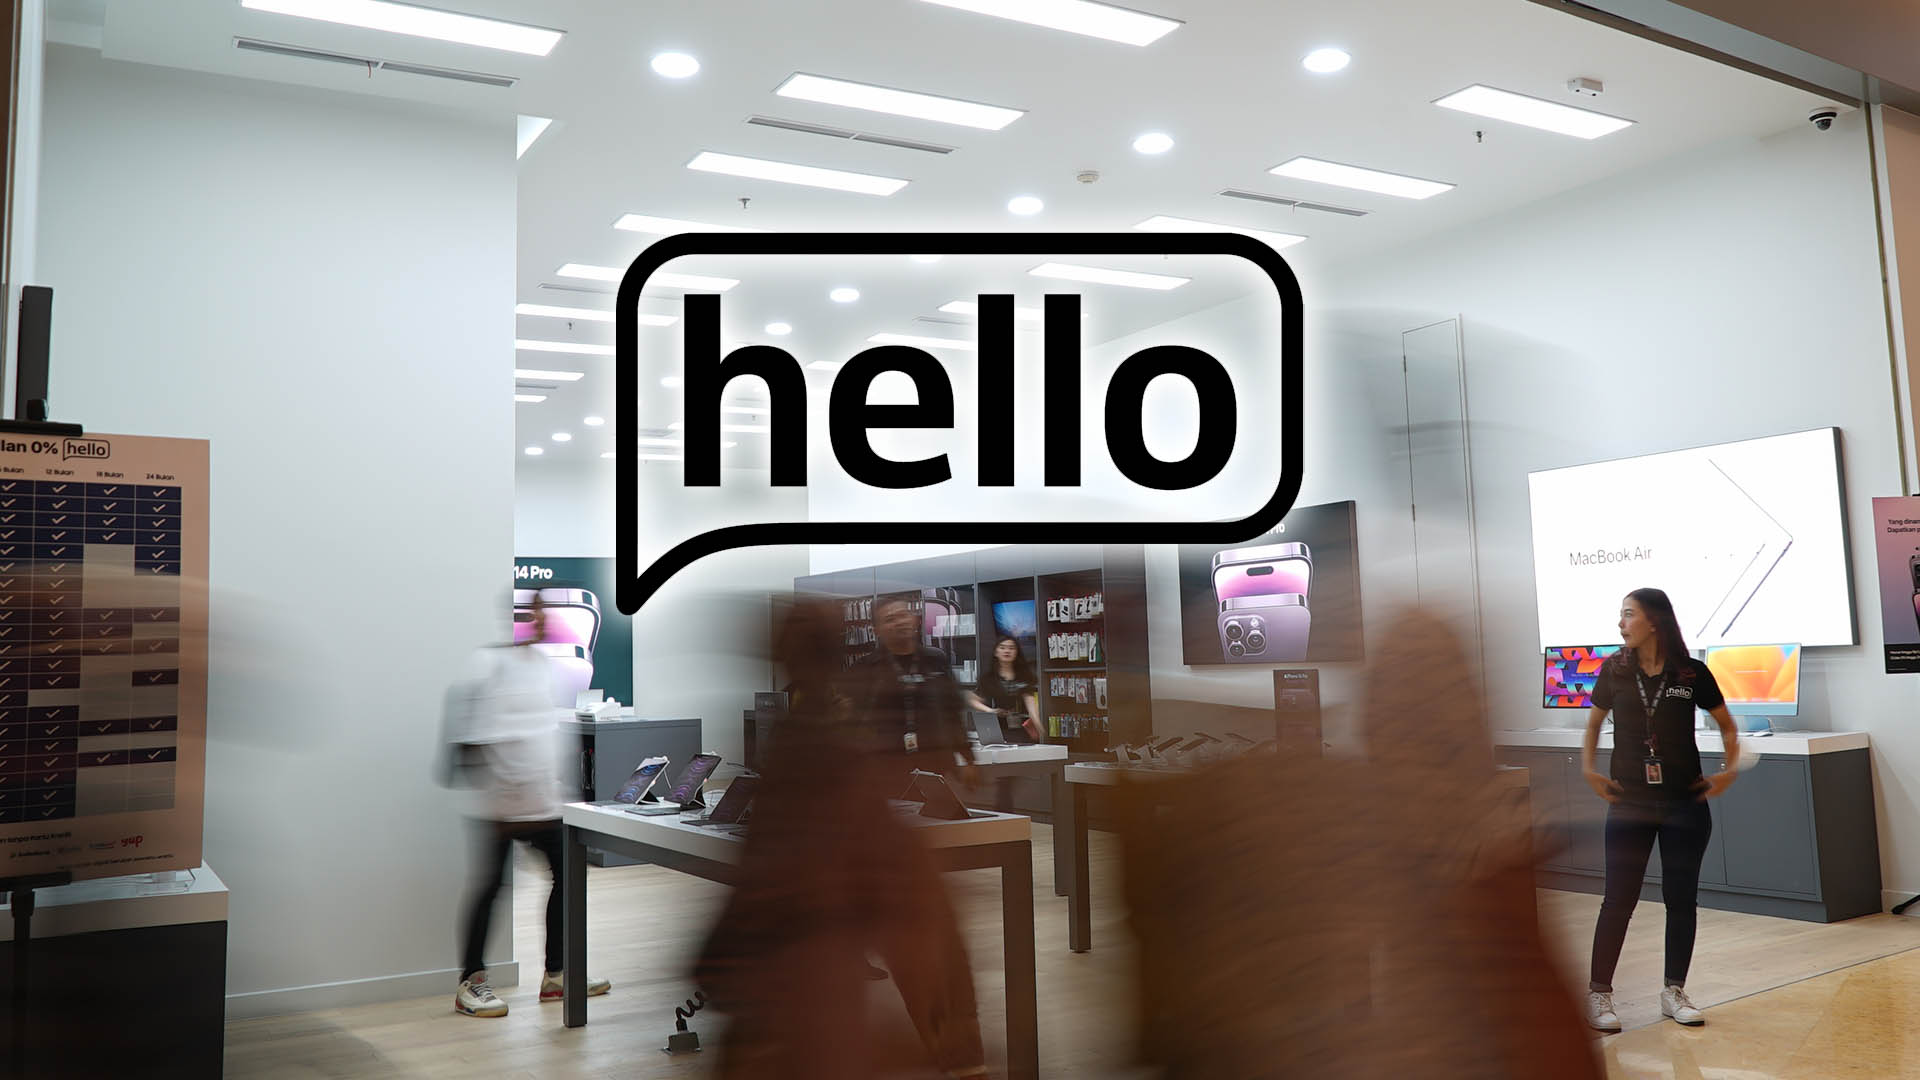 Blibli Hello Apple Store